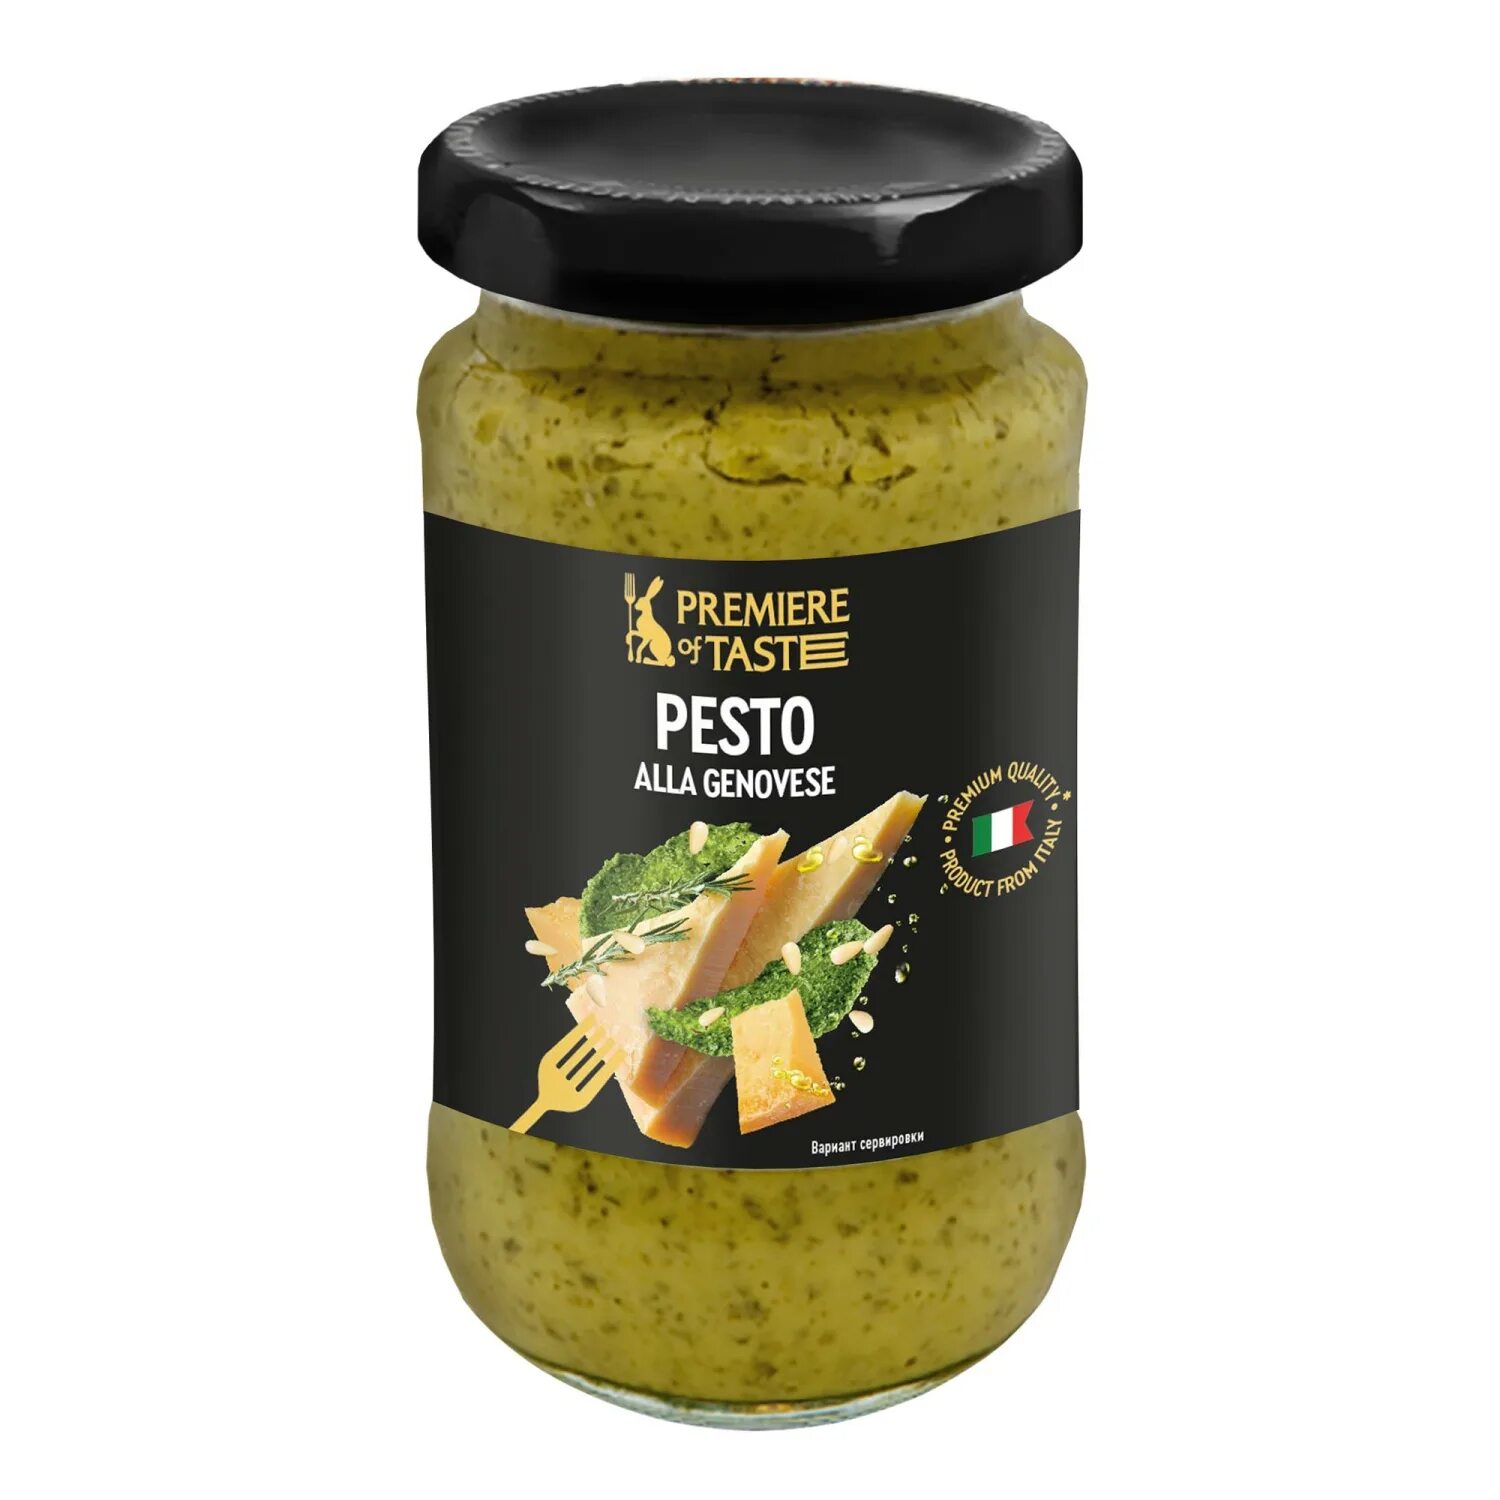 Pesto alla. Соус песто Bella Parma Genovese. Premiere of taste соус песто Дженовезе 170/190.